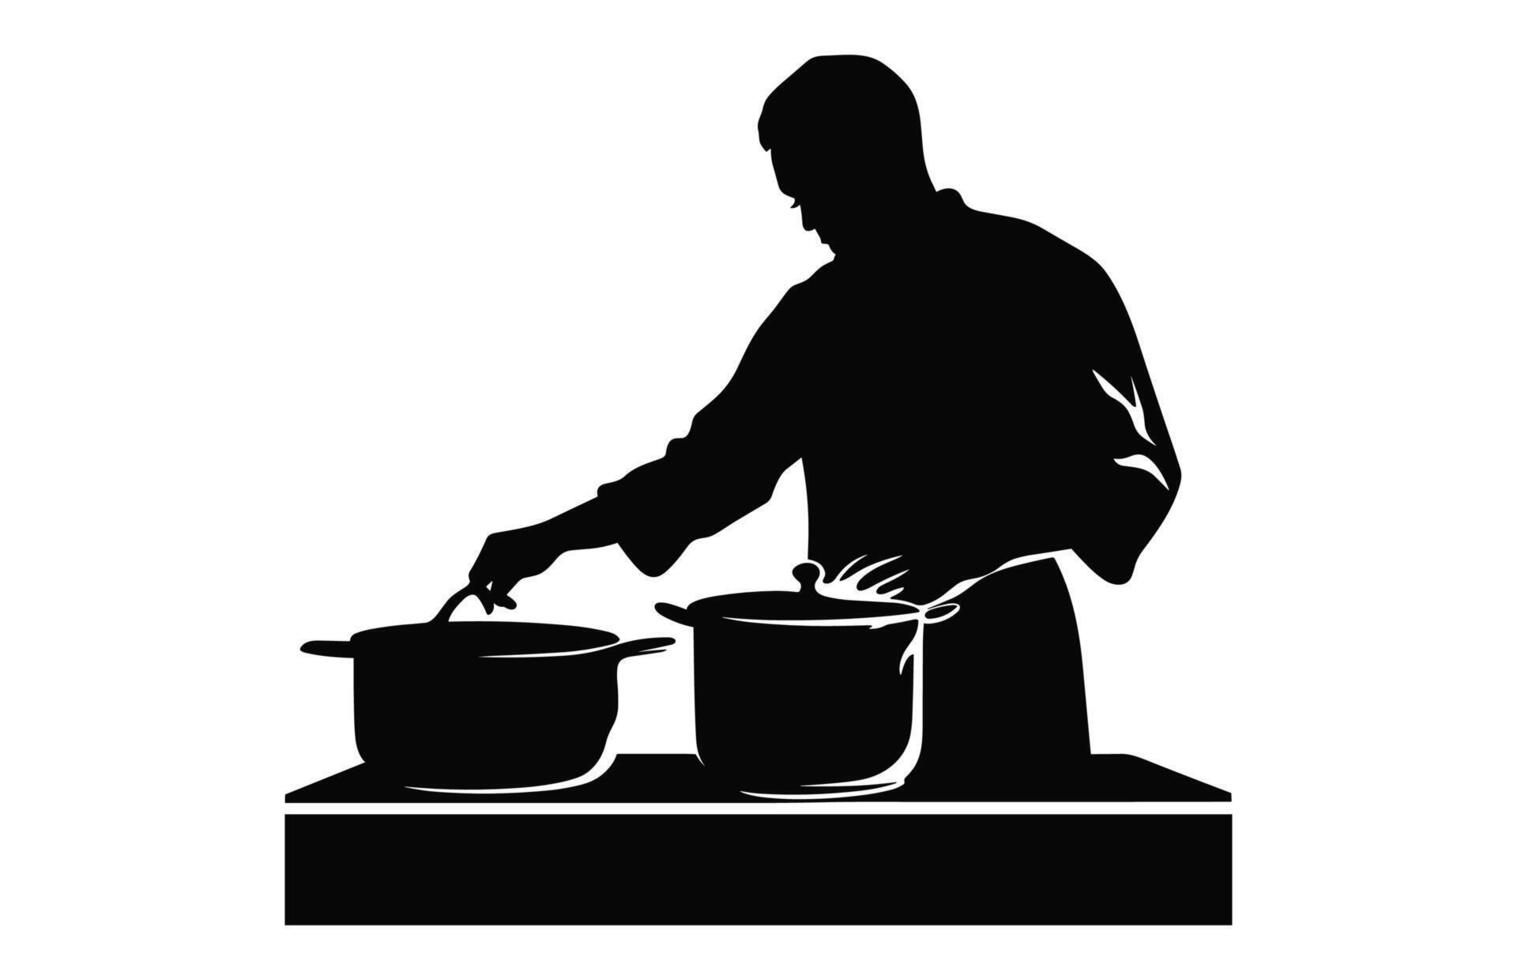 hombre Cocinando silueta vector aislado en un blanco fondo, hombres preparando comida en cocina negro clipart